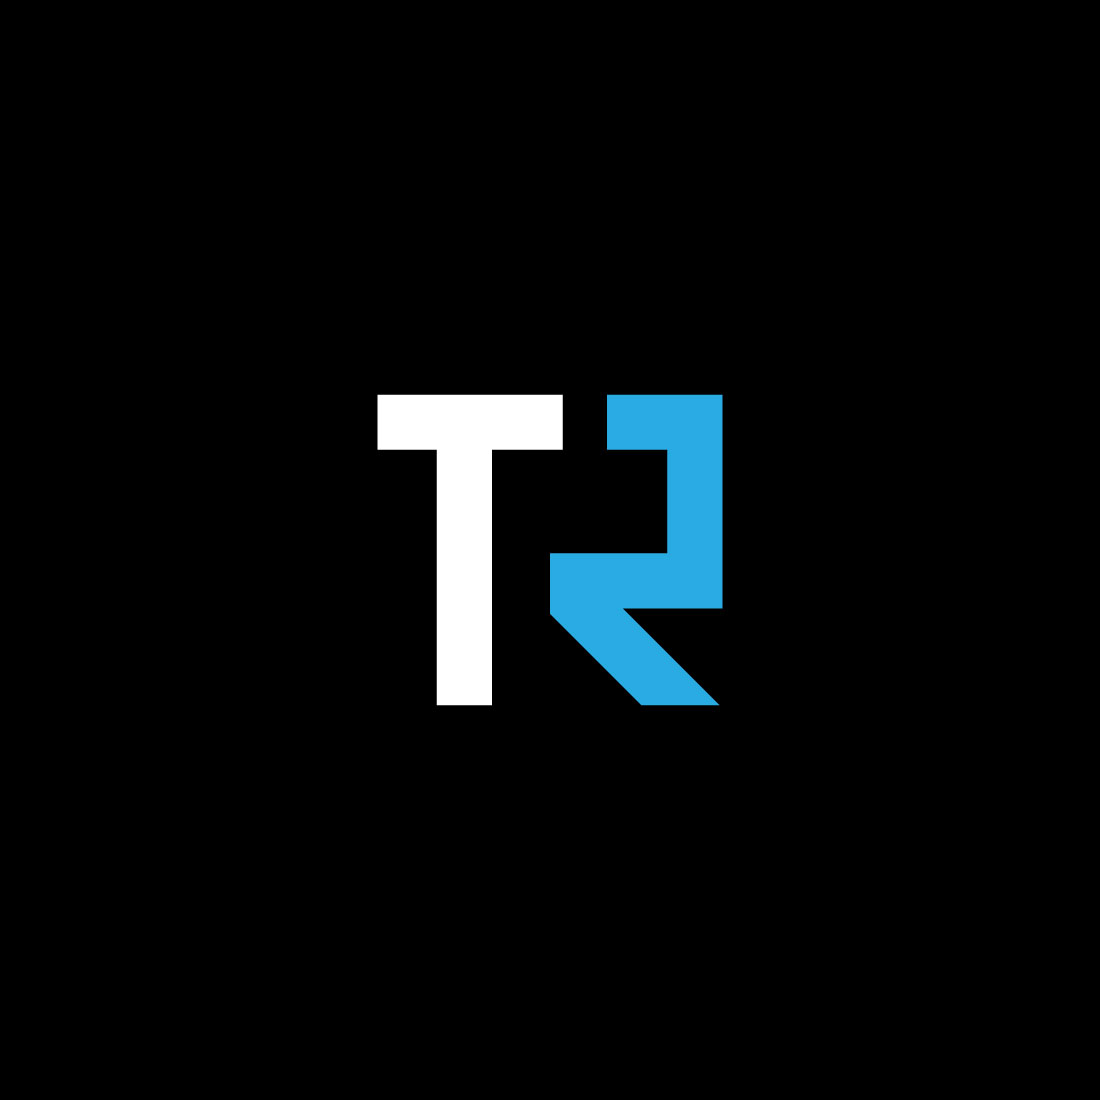 Simple TR Logo Design cover image.